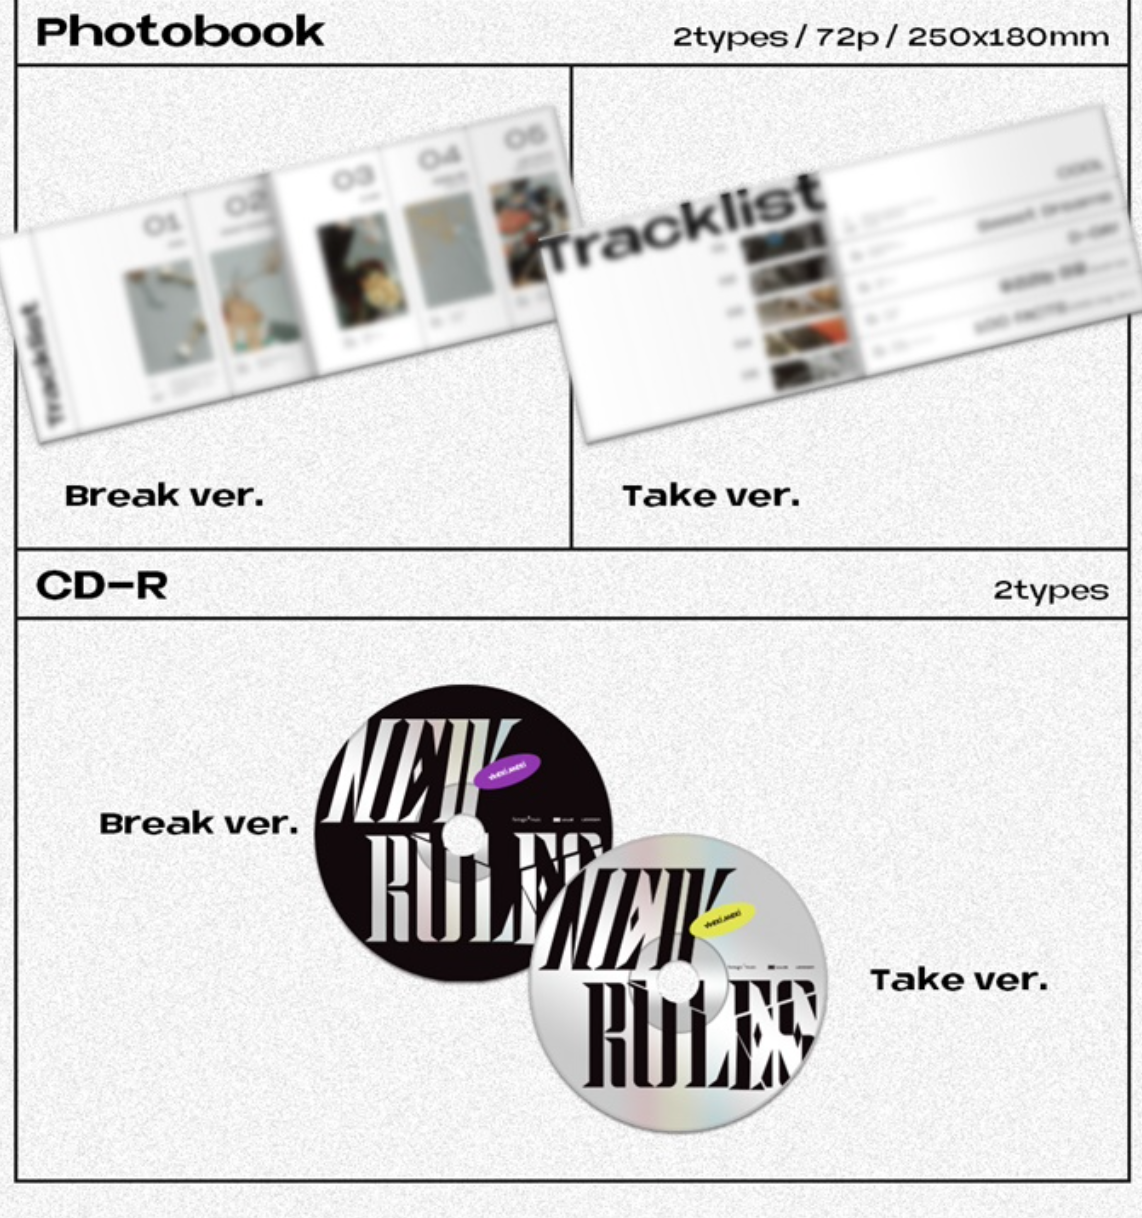 WekiMeki 4th Mini Album: New Rules